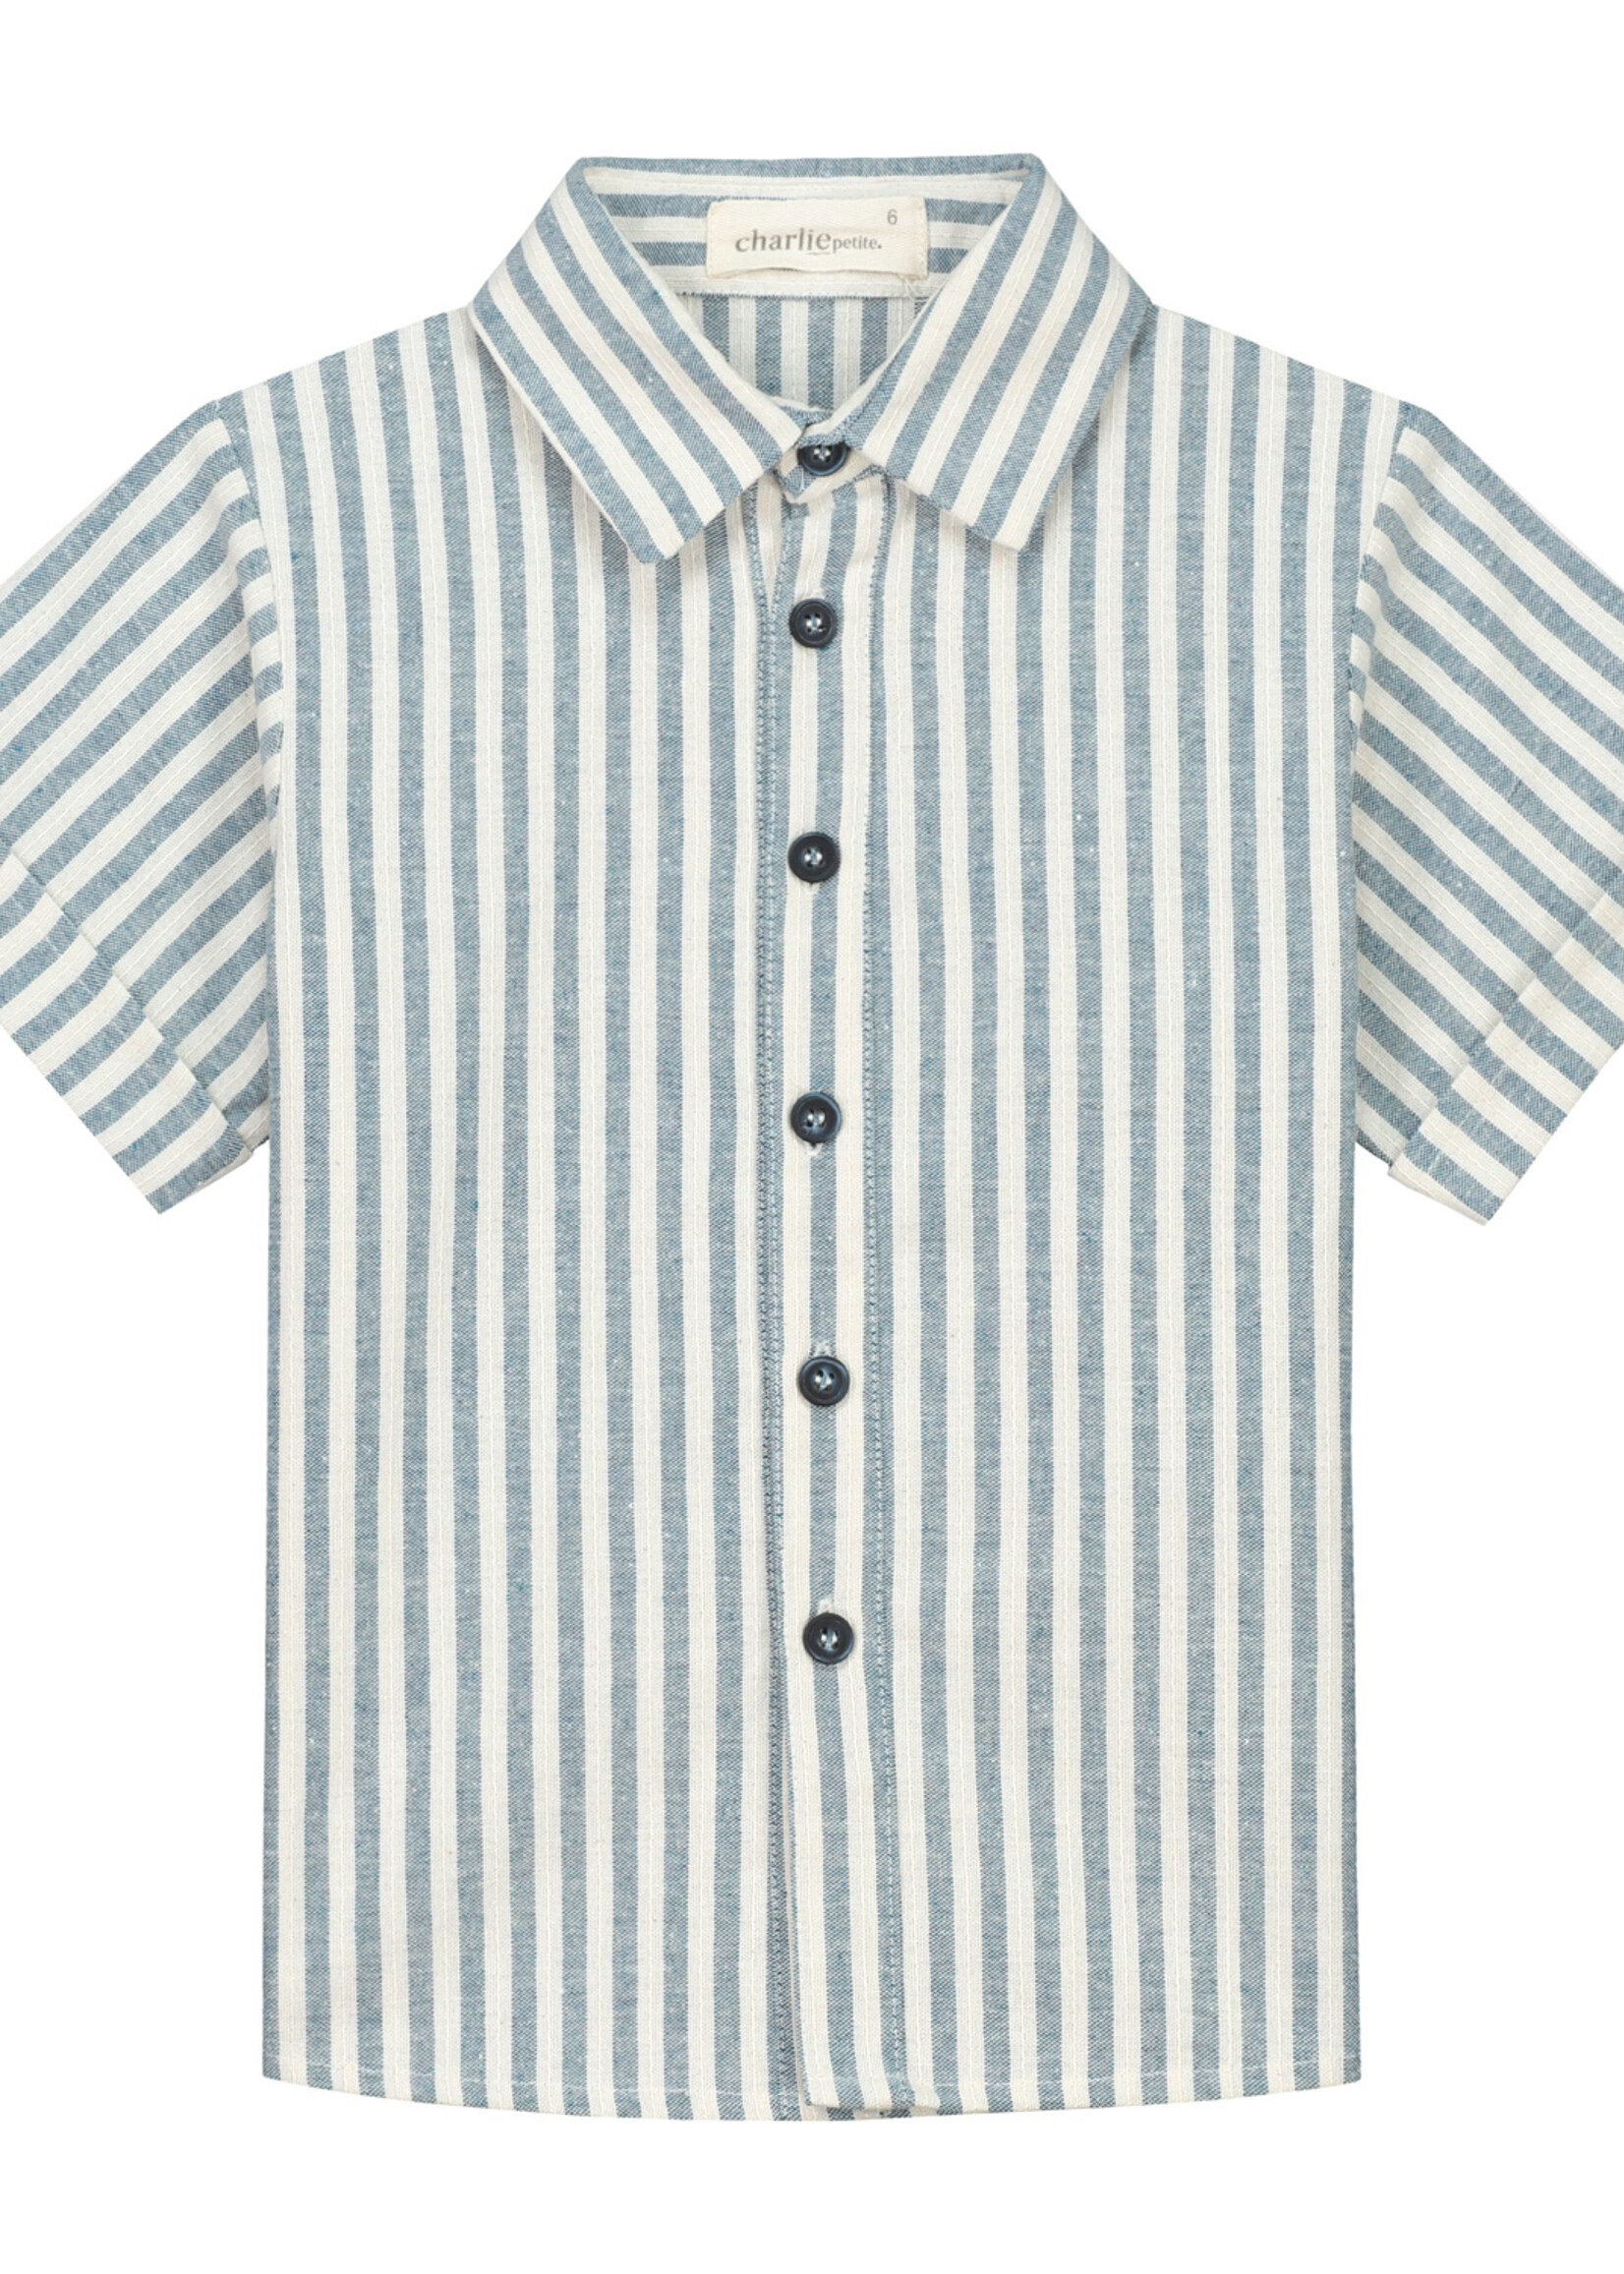 Charlie Petite Ivan blouse blue/white stripe - Charlie Petite